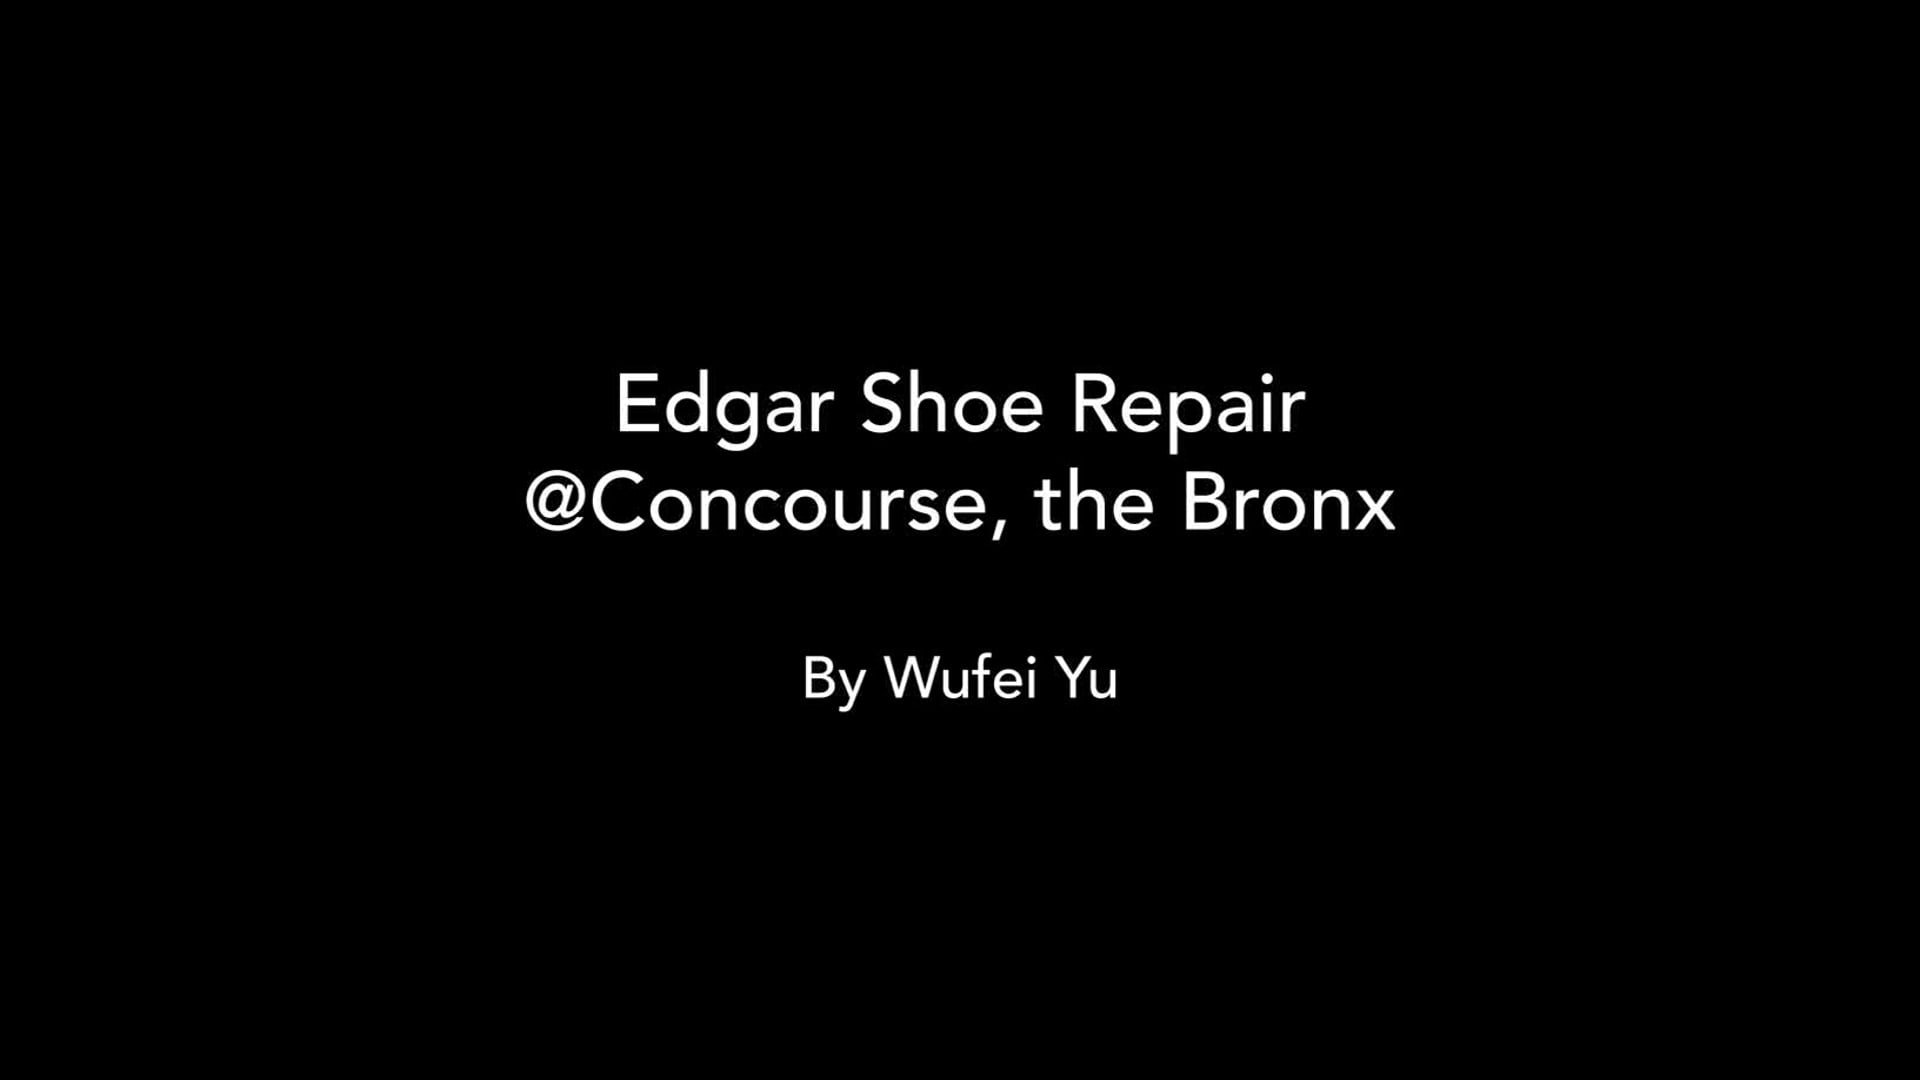 Edgar Shoe Repair @Concourse, the Bronx - Wufei Yu